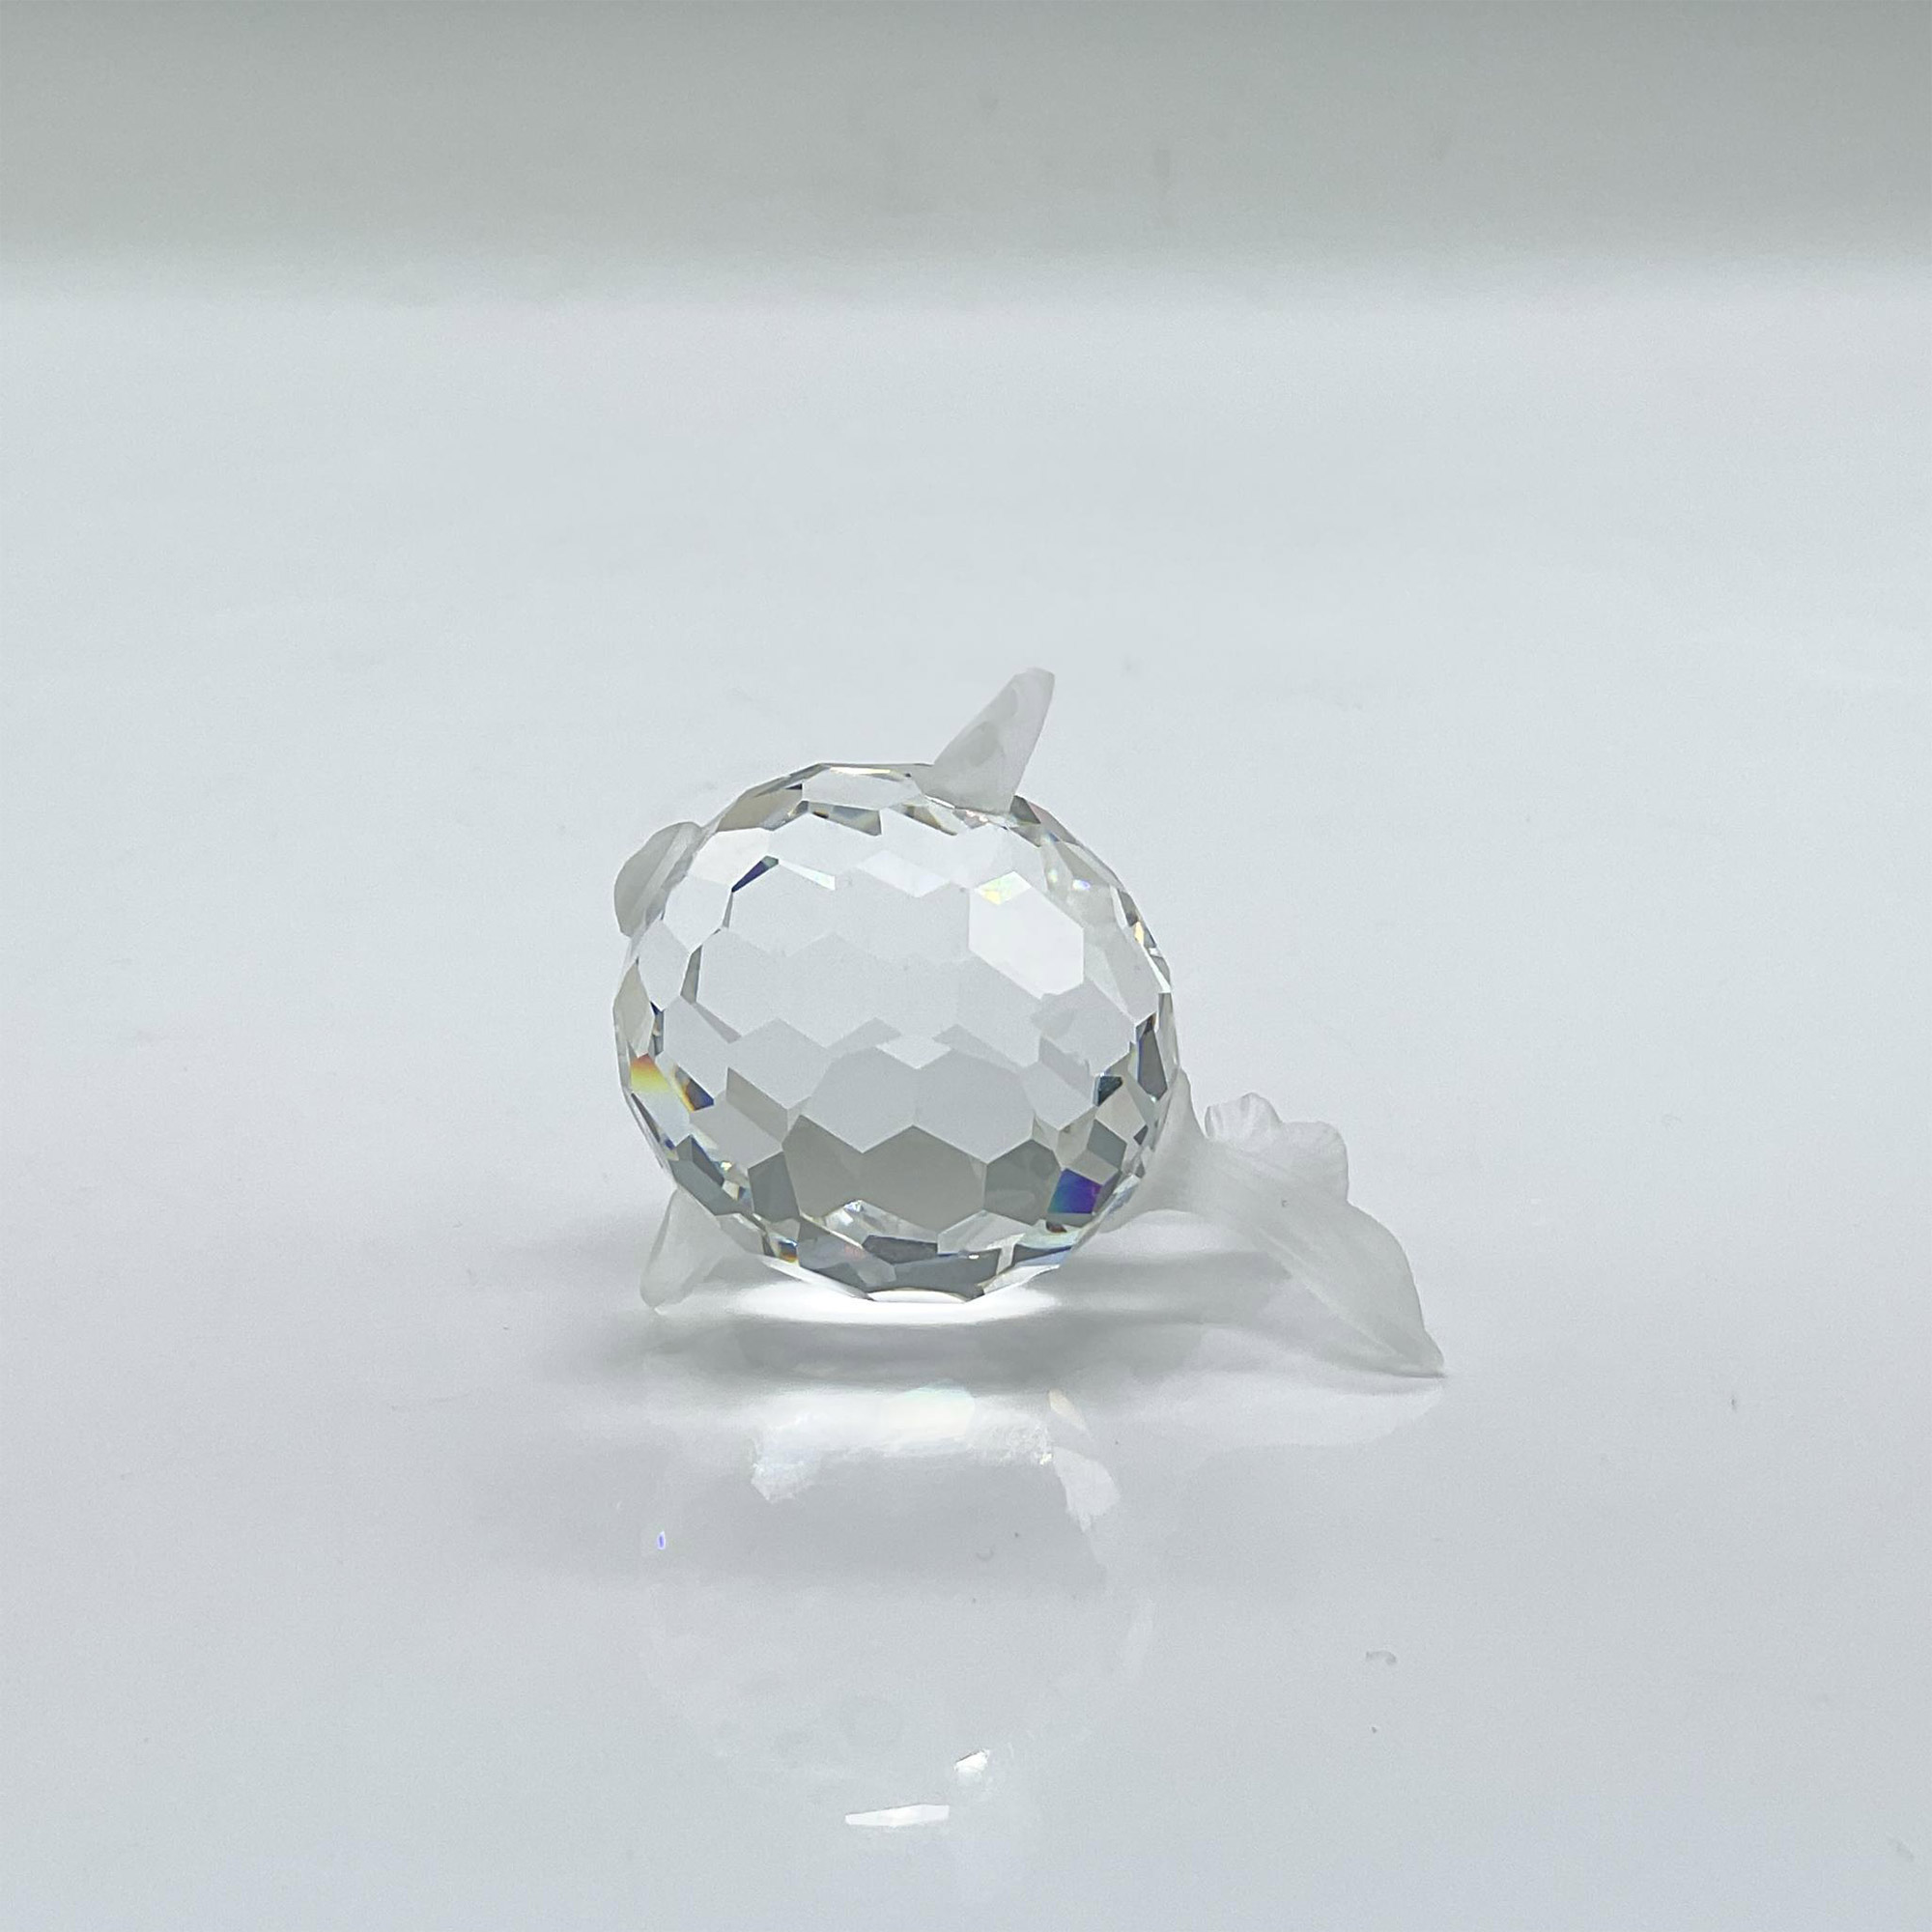 Swarovski Silver Crystal Figurine, Small Blowfish - Image 5 of 6